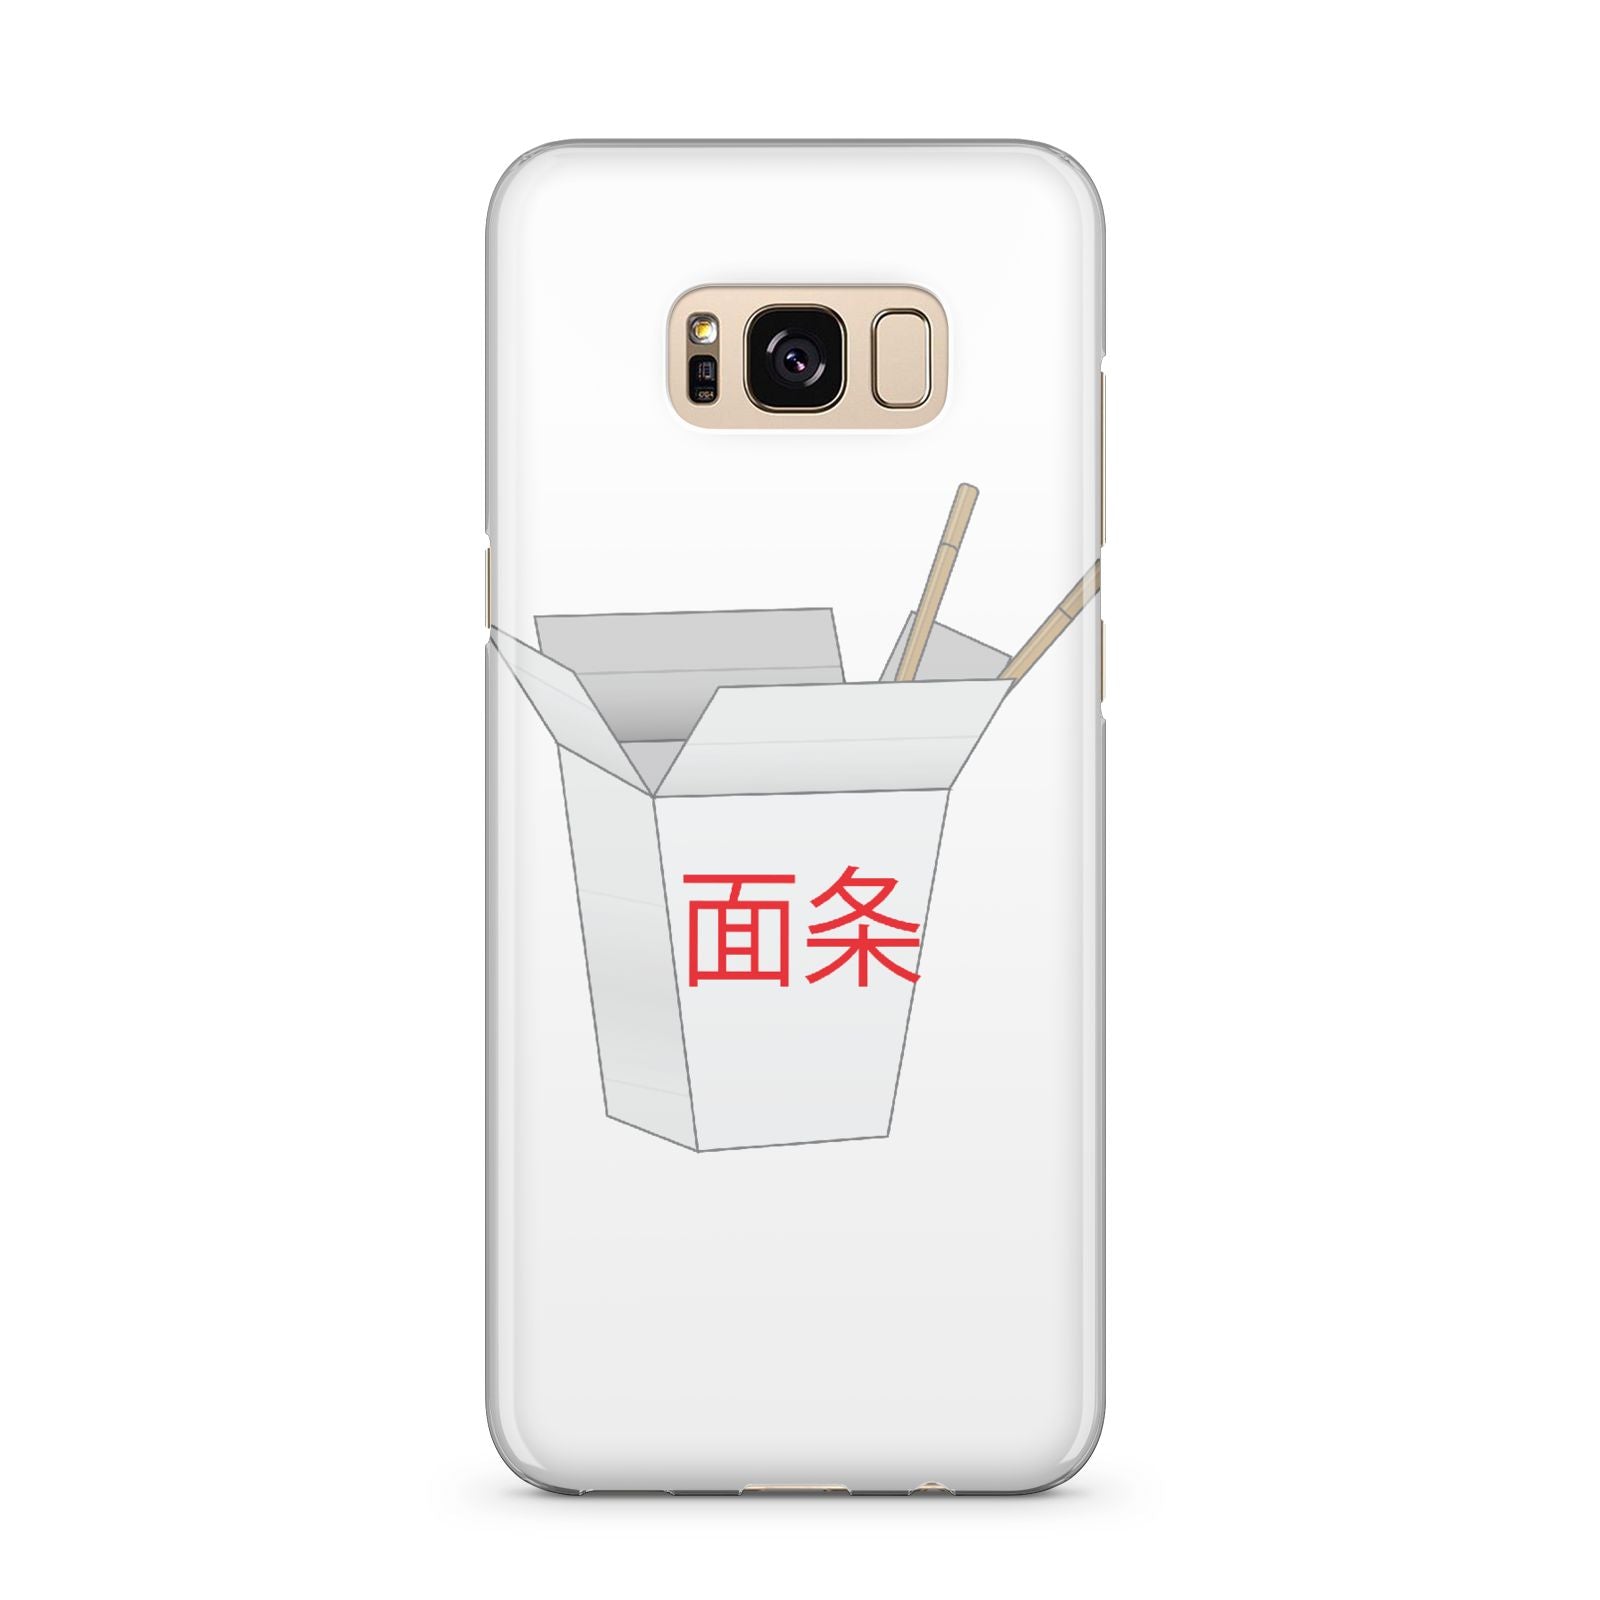 Chinese Takeaway Box Samsung Galaxy S8 Plus Case